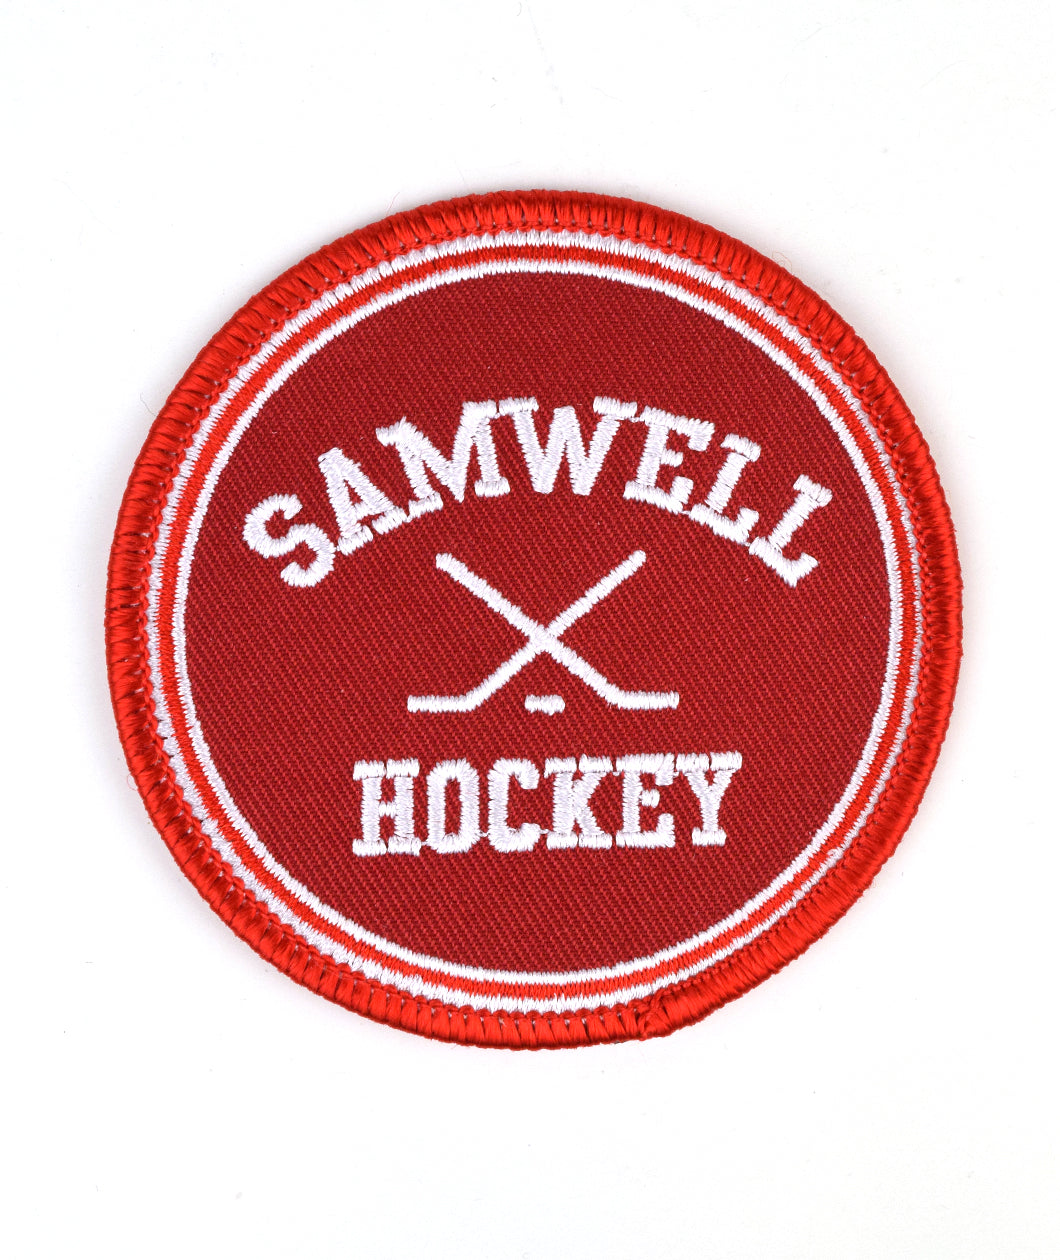 Samwell Mens Hockey Patch